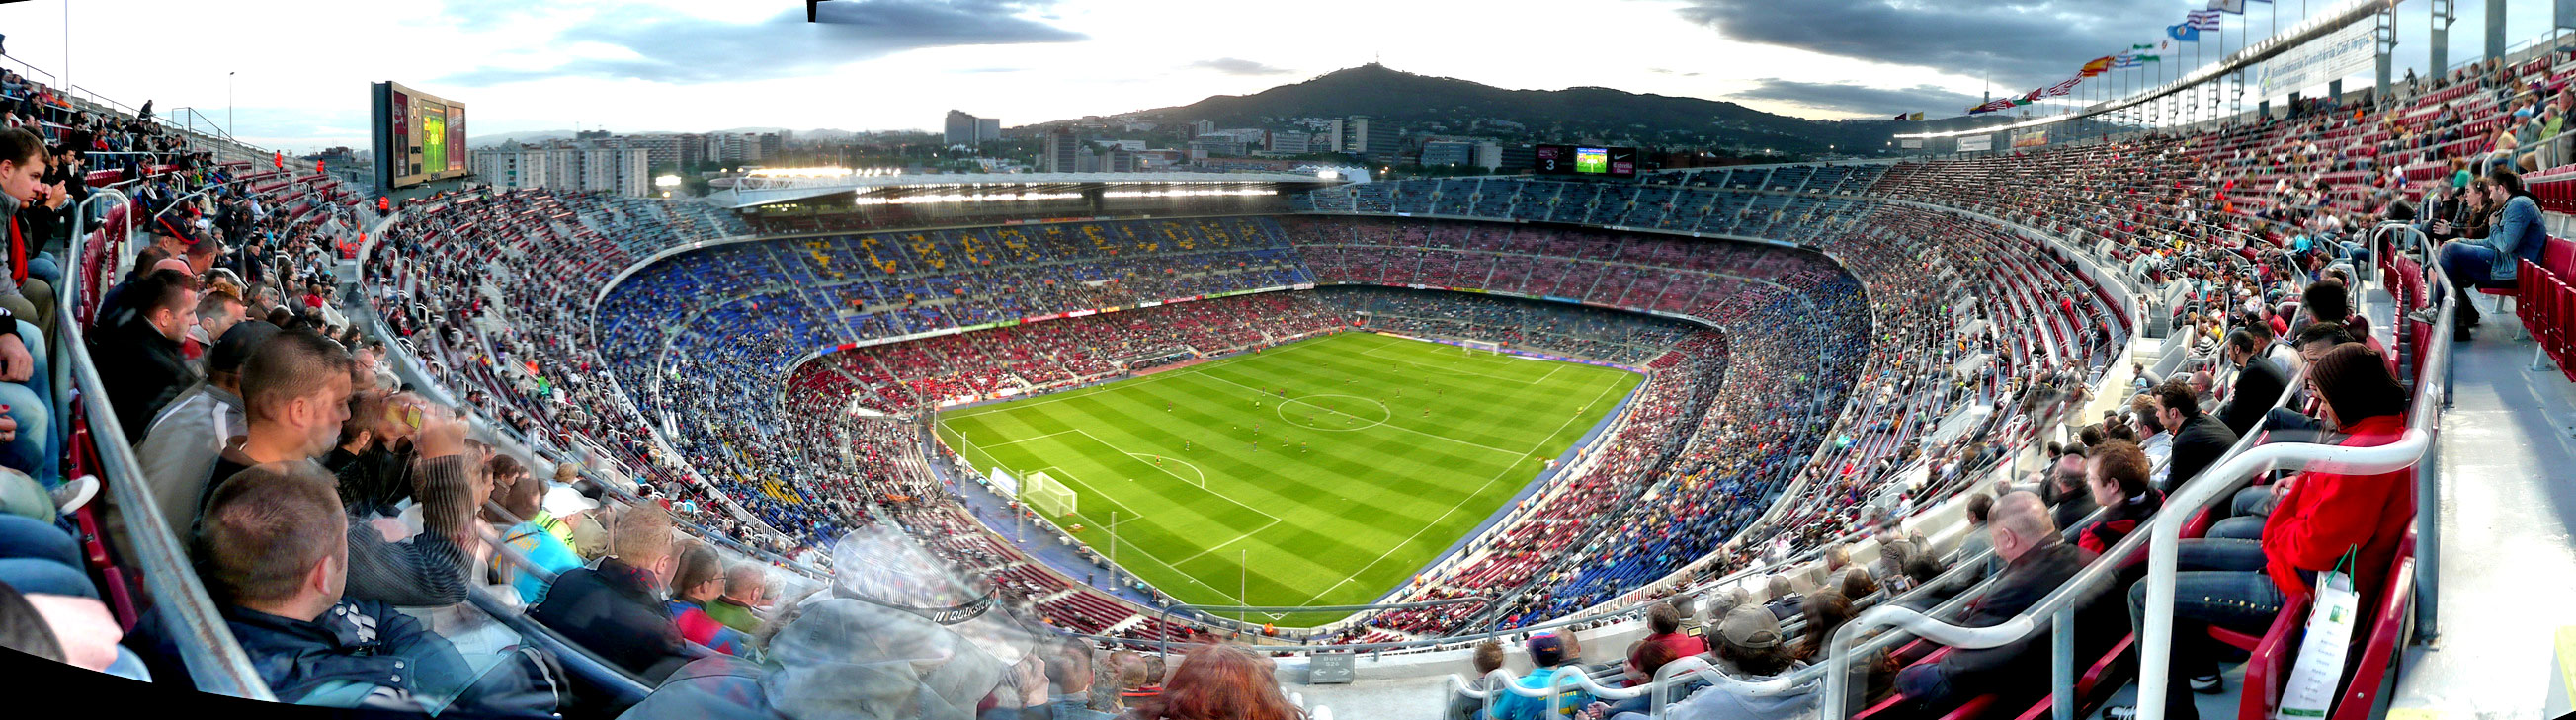 Heimat des FC Barcelona: Das Camp Nou